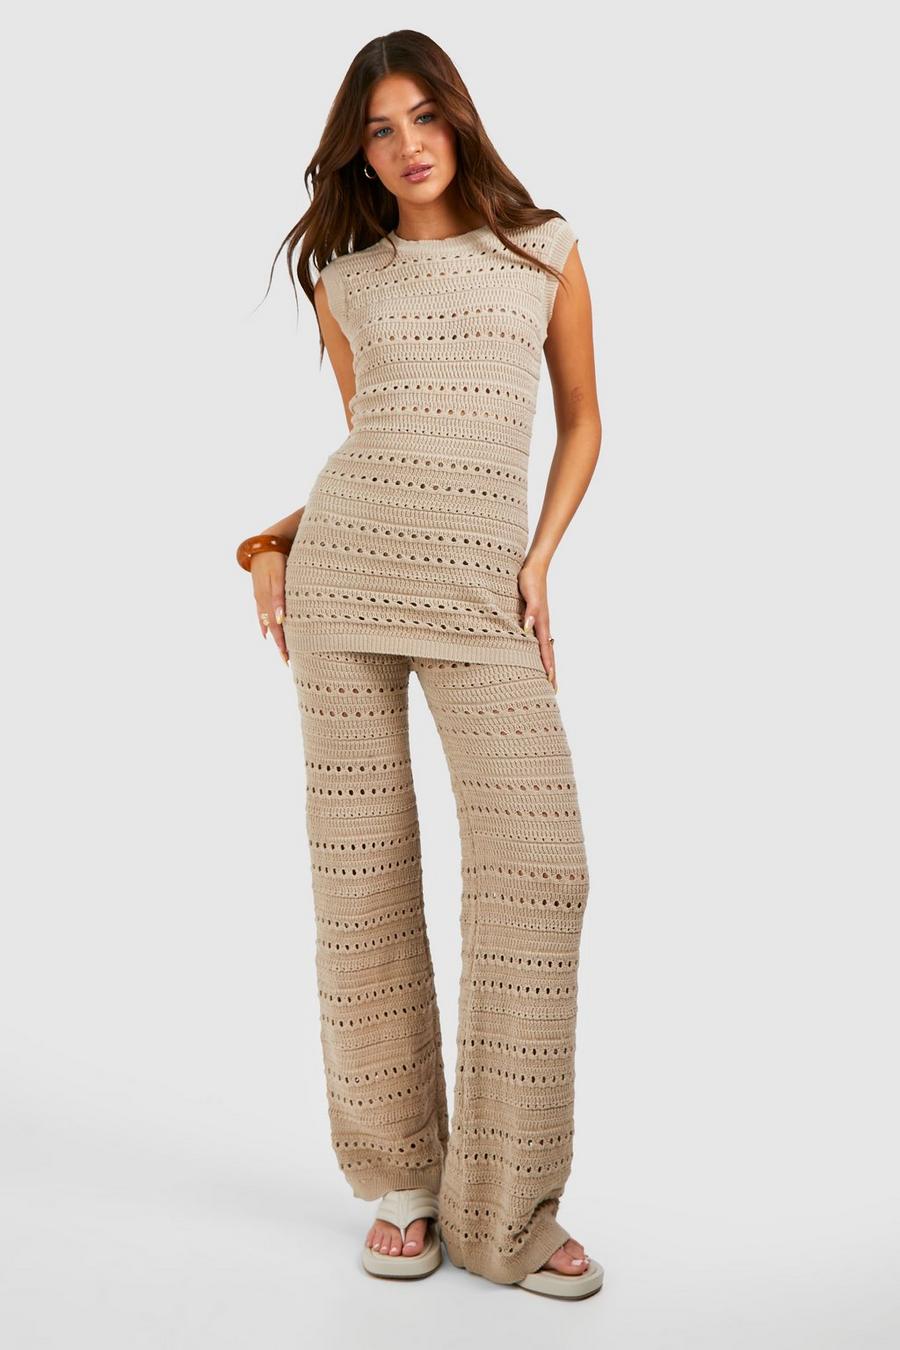 Stone Crochet Tunic And Wide Leg Pants Knitted Set